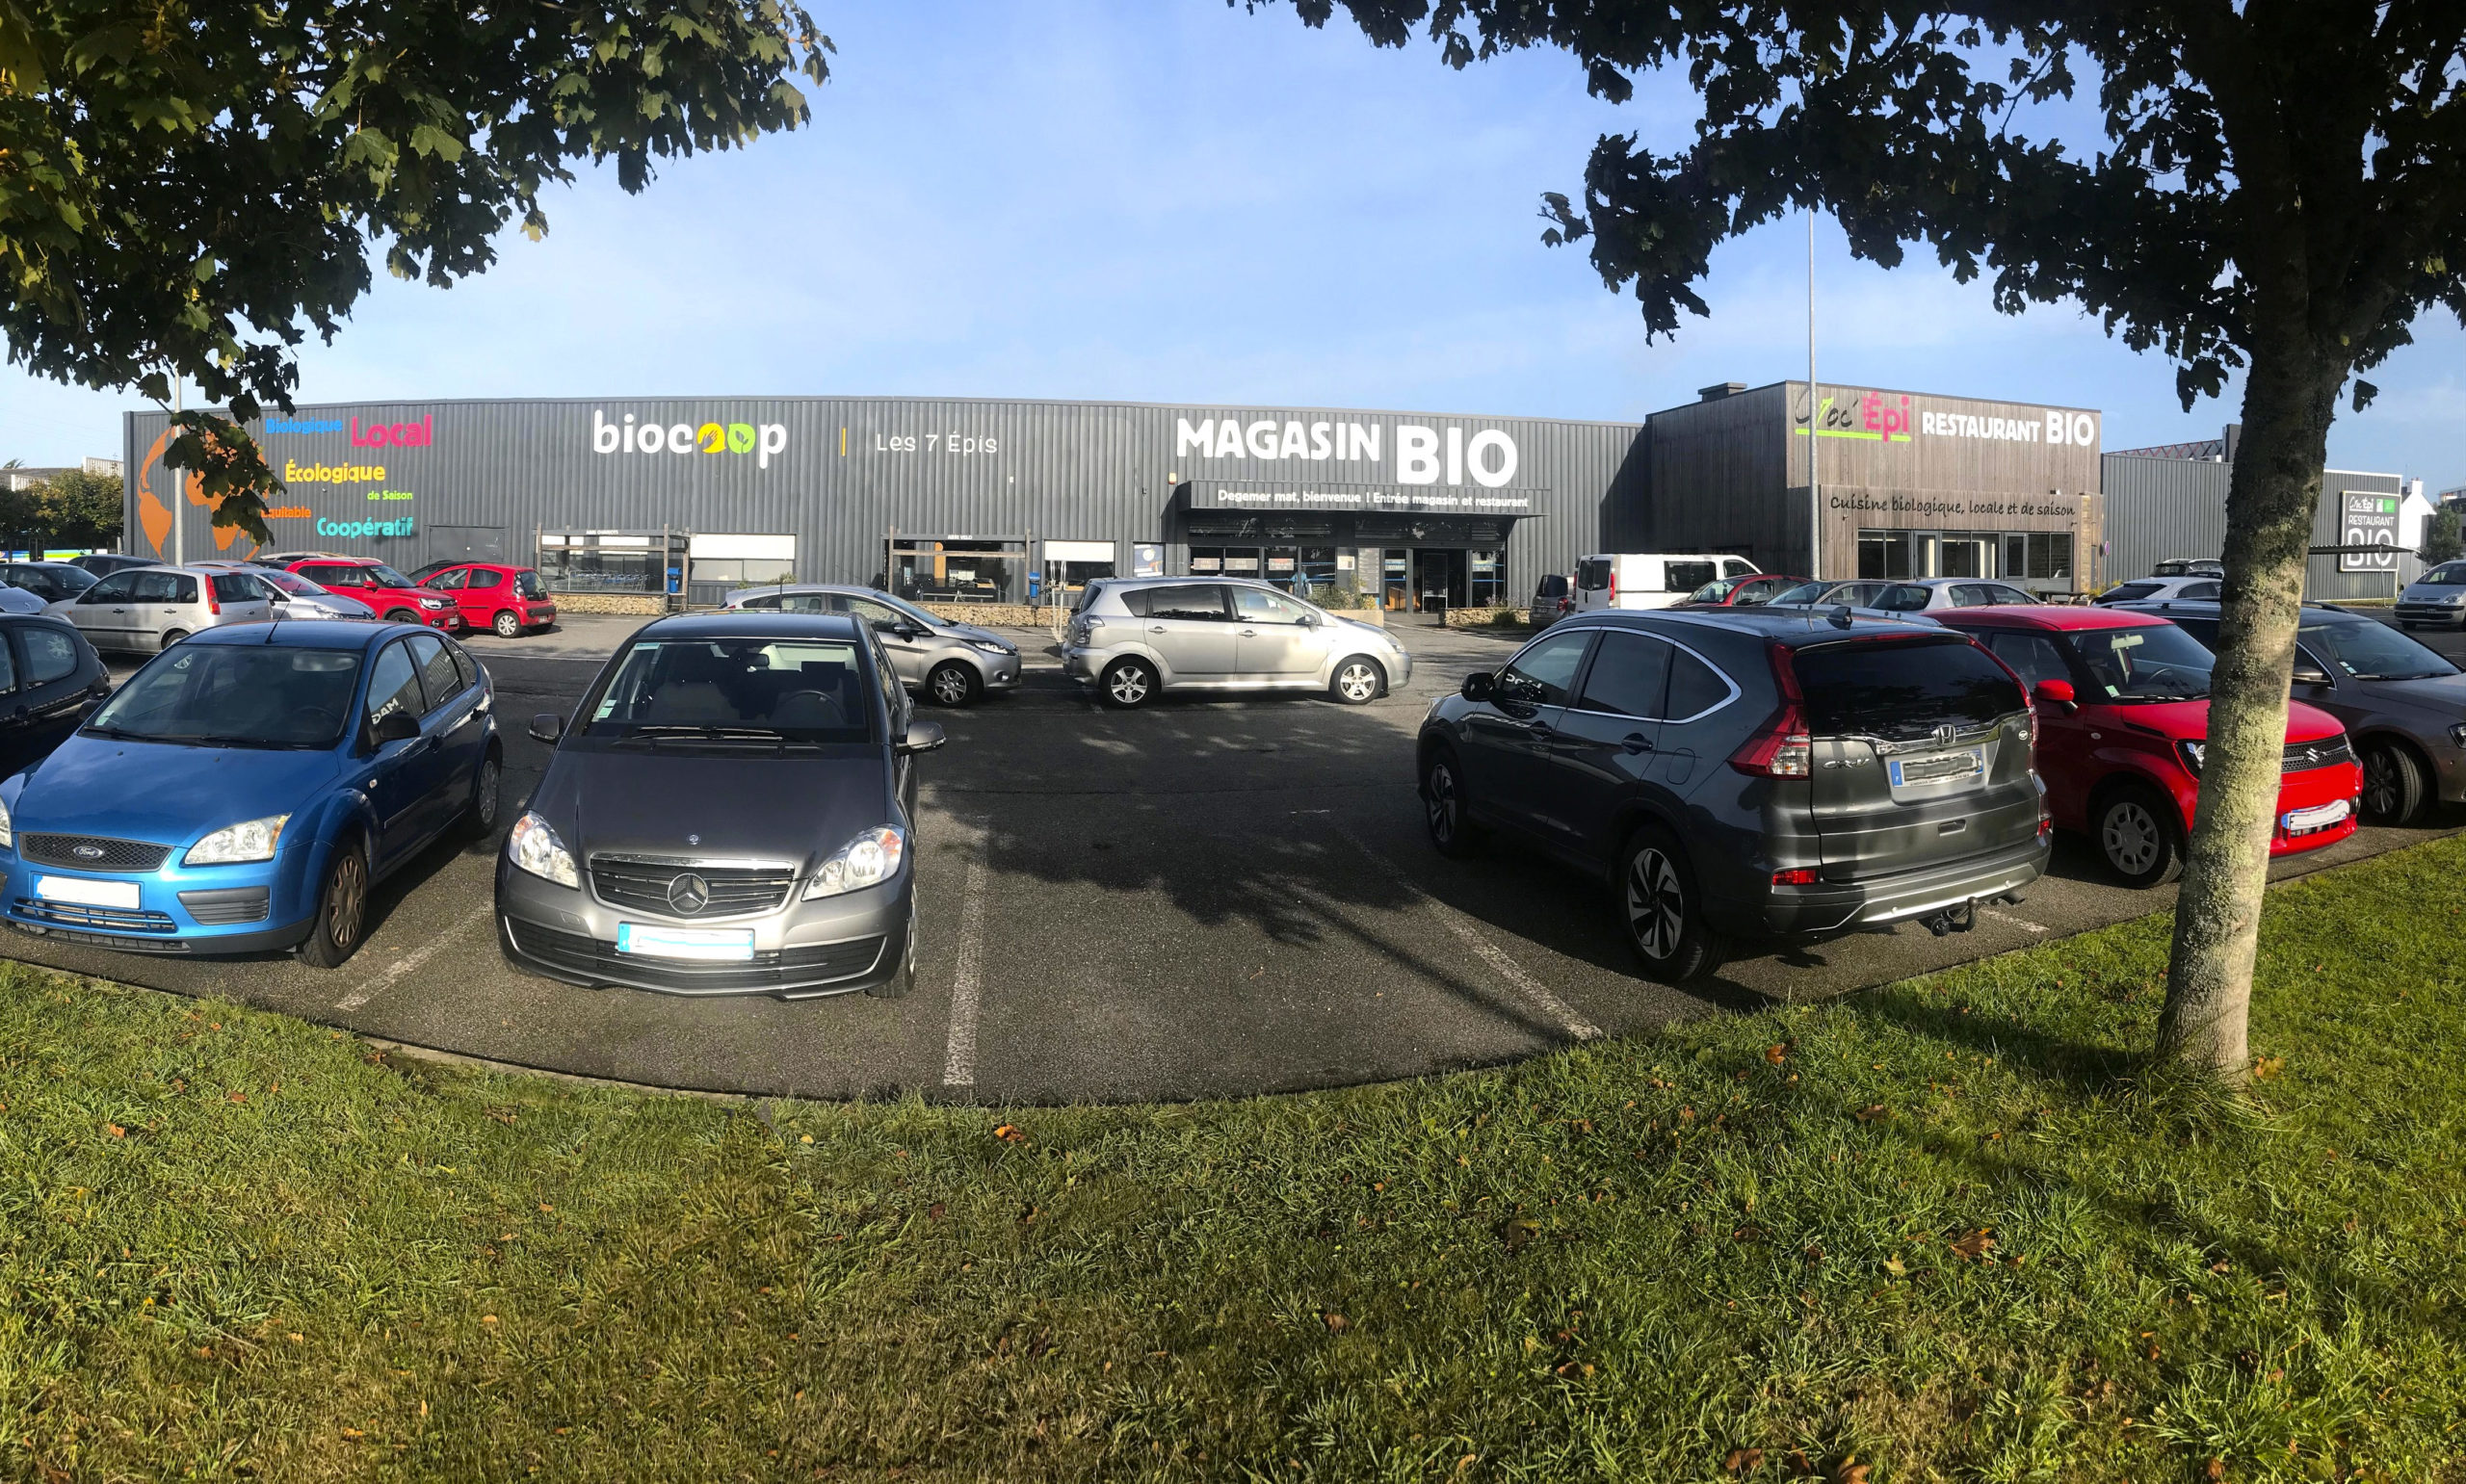 Magasin et parking Biocoop les 7 Epis Lorient Keryado